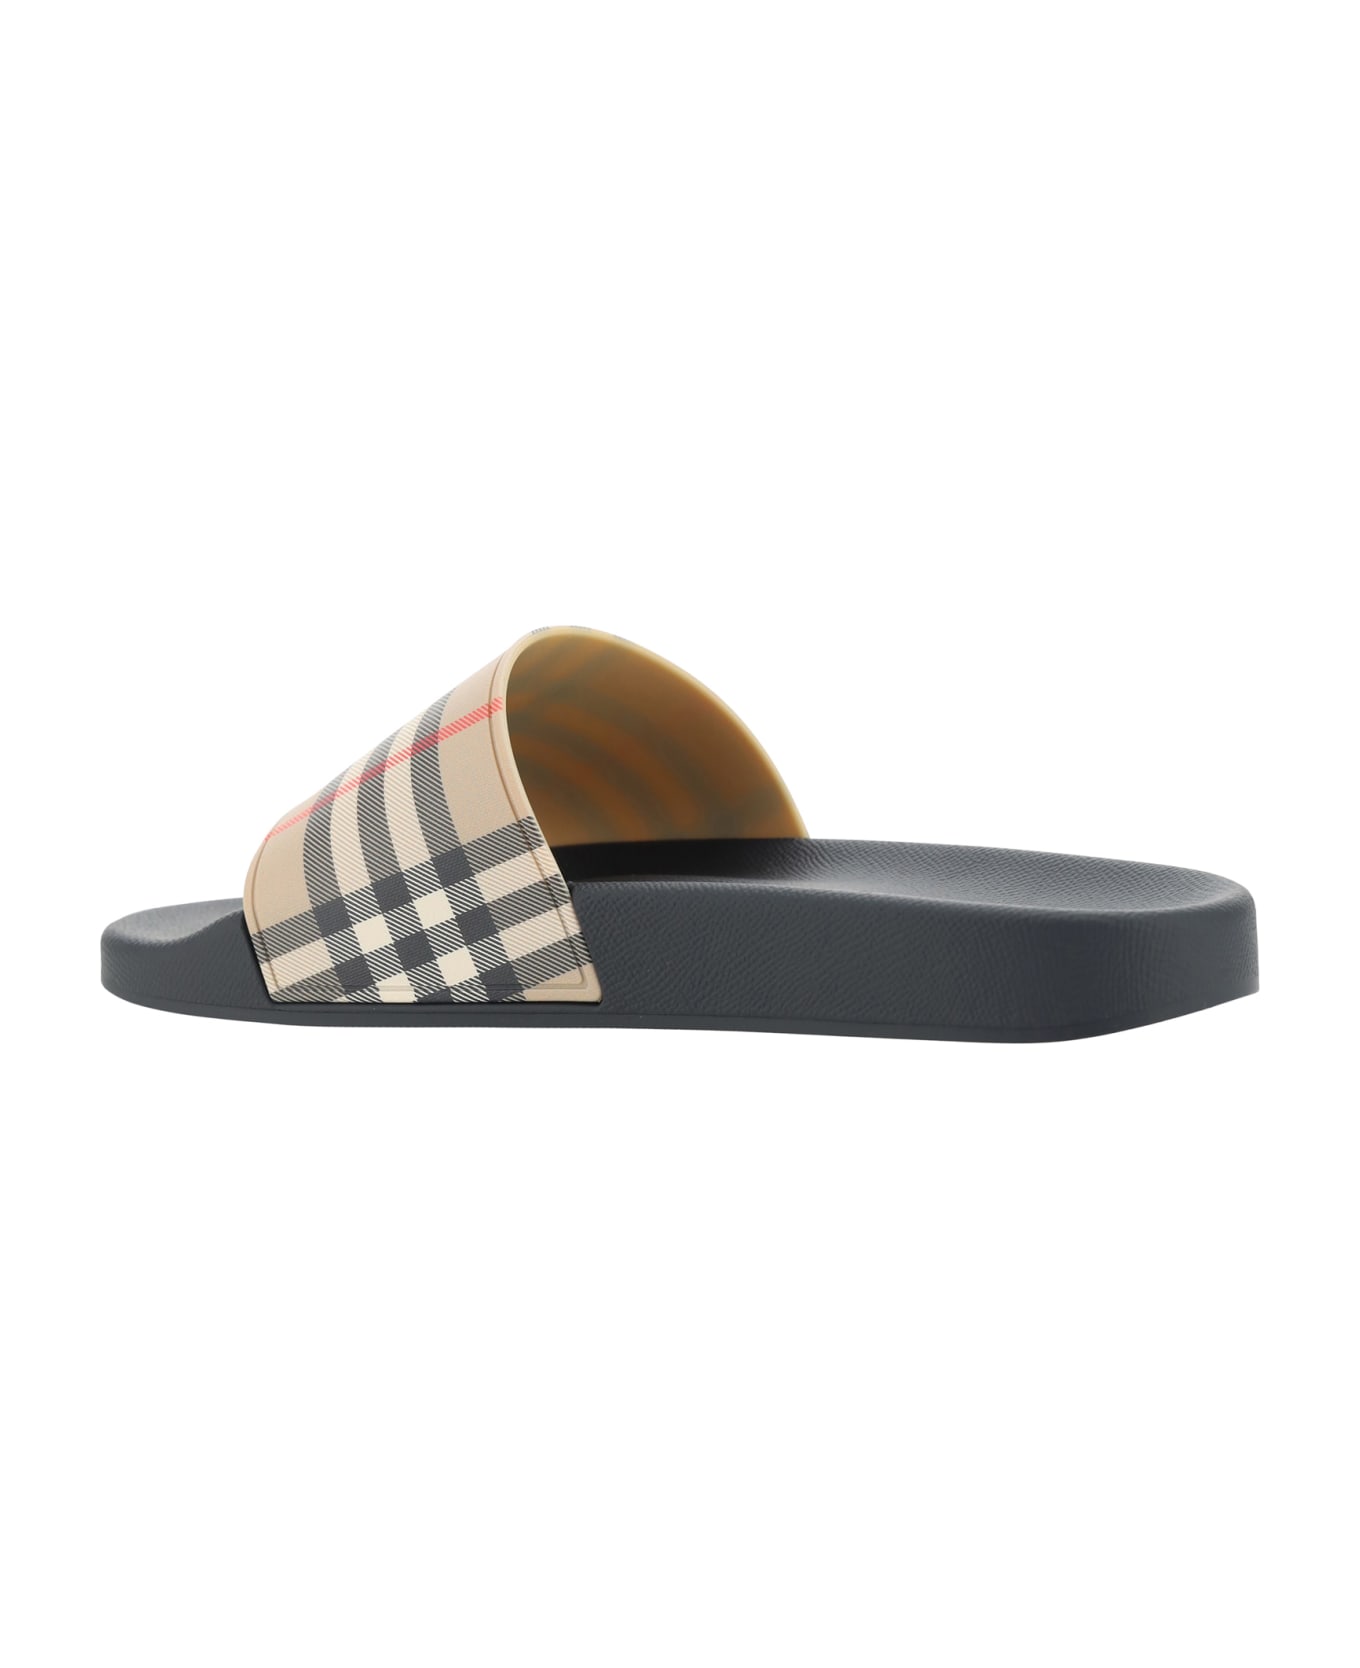 Burberry Sandals - NEUTRALS/BLACK